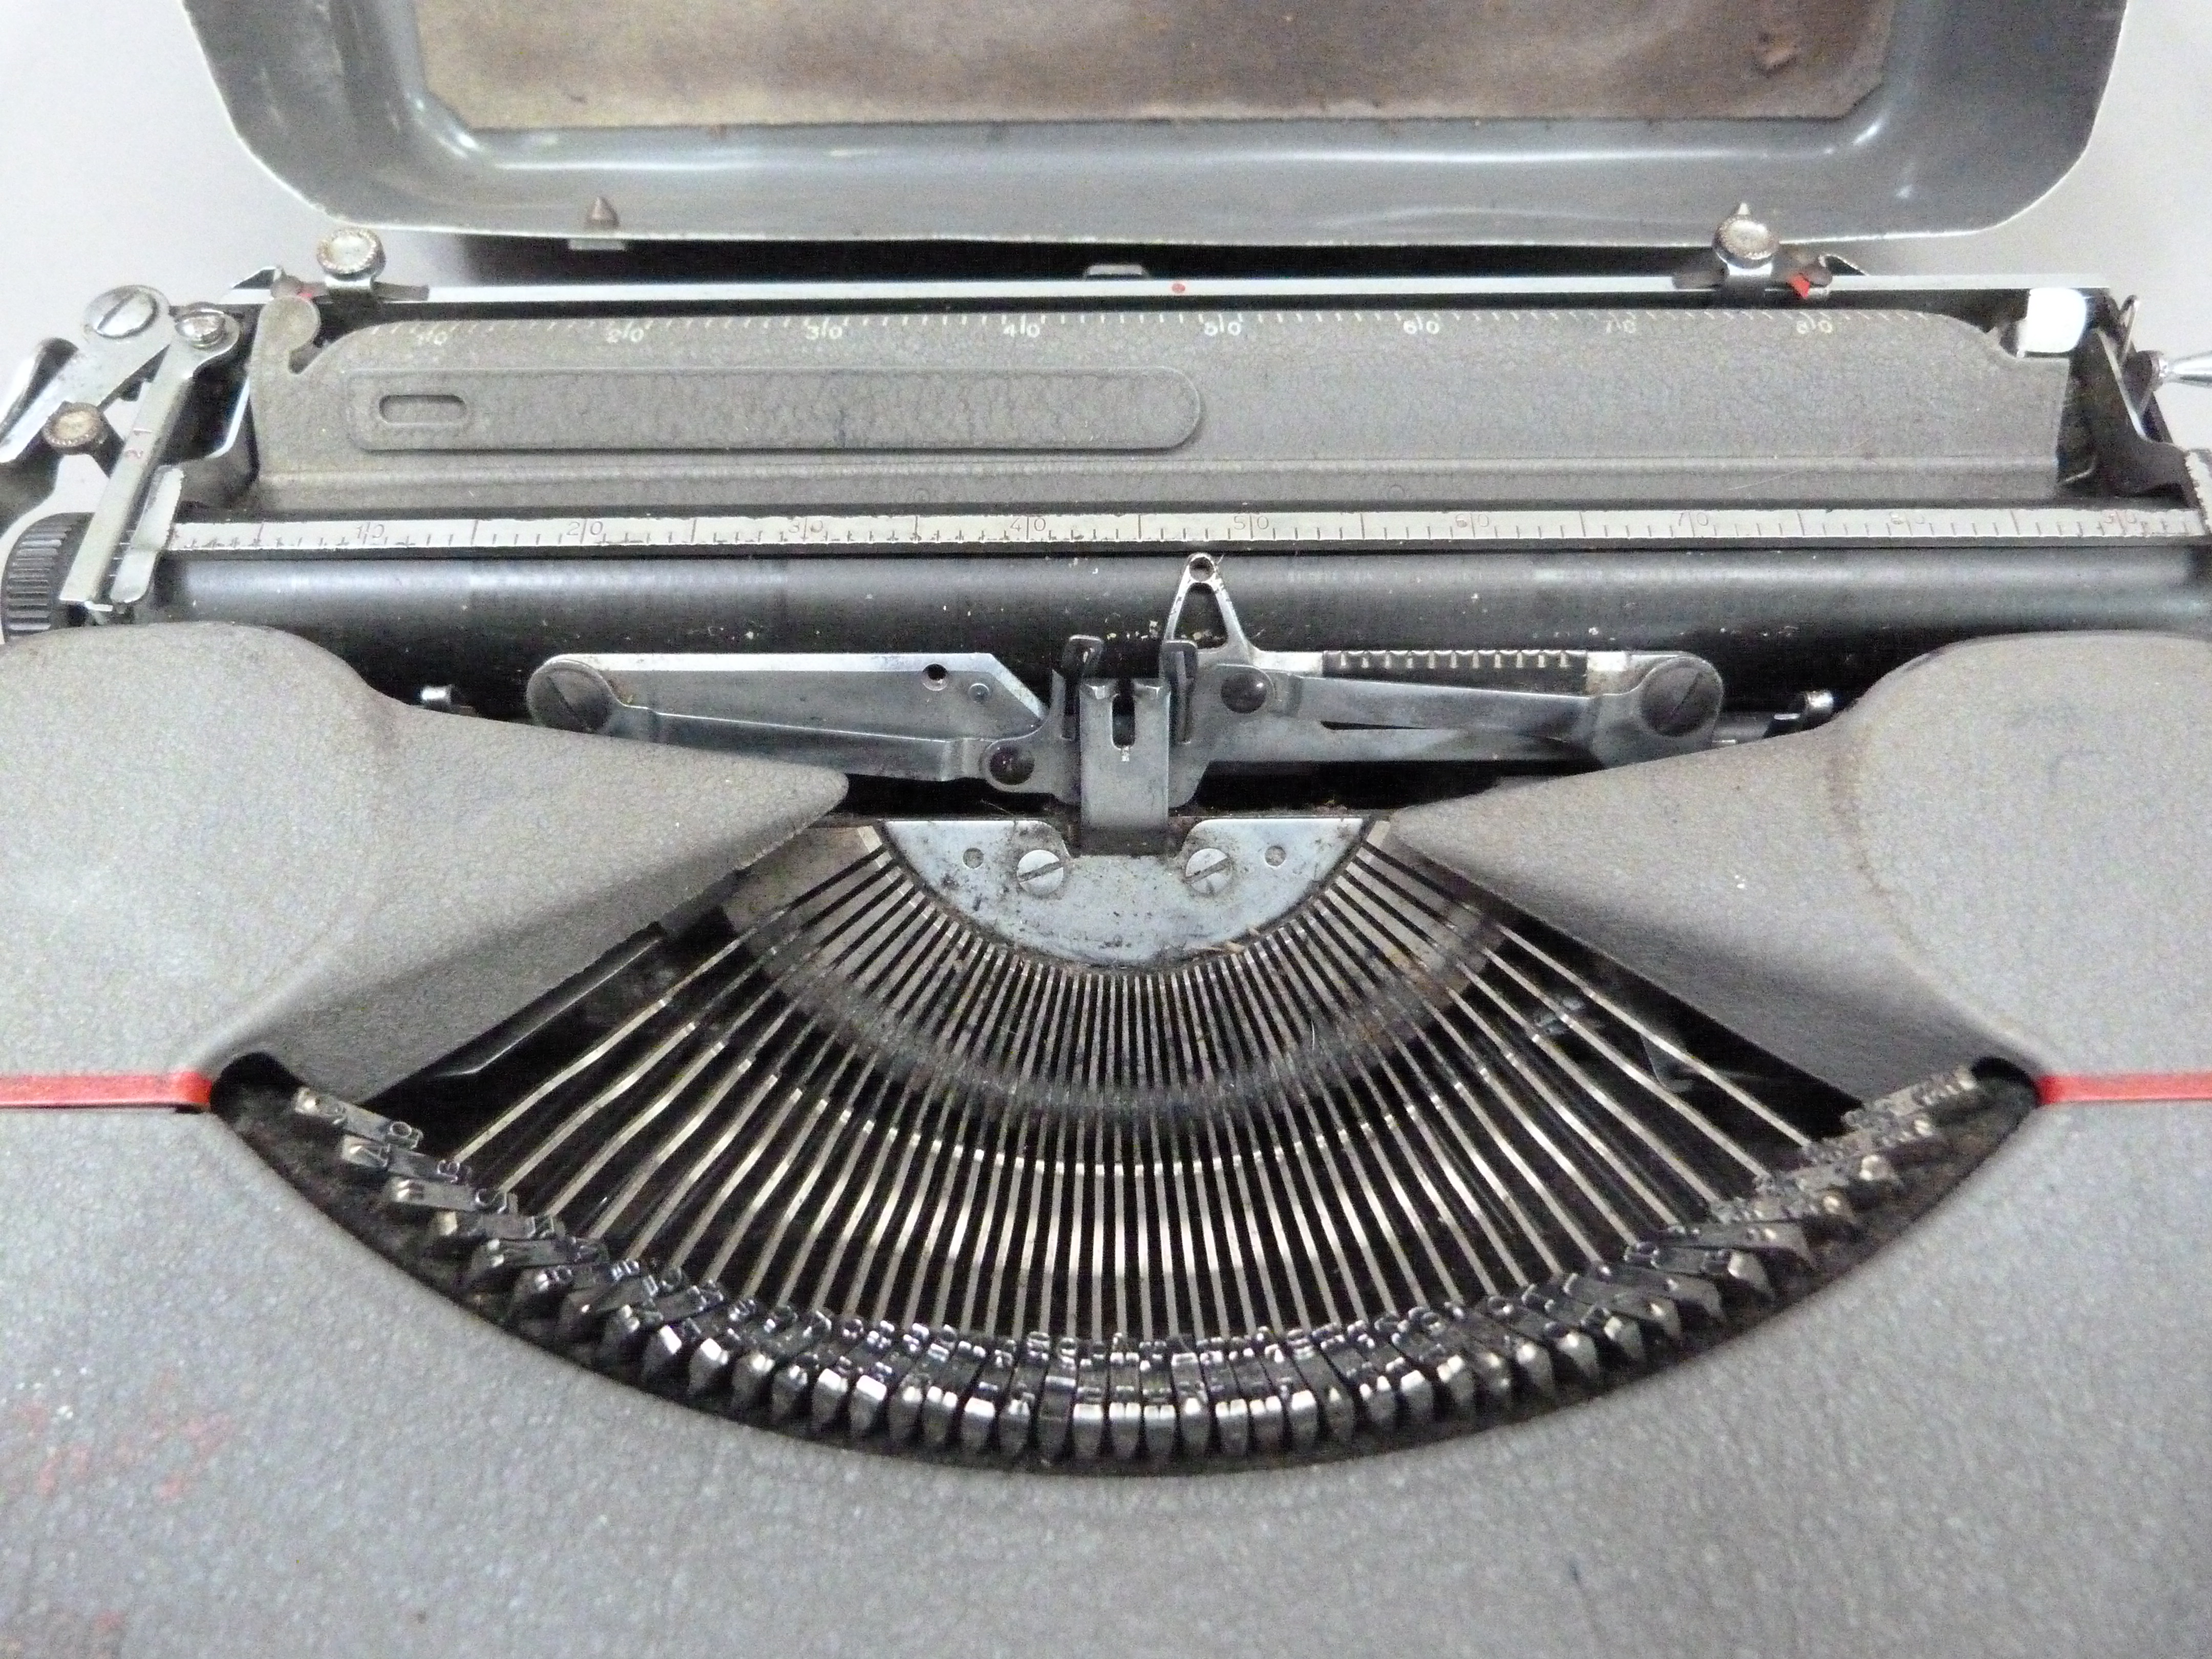 A Hermes portable typewriter by Paillard in grey metal case - Image 3 of 4